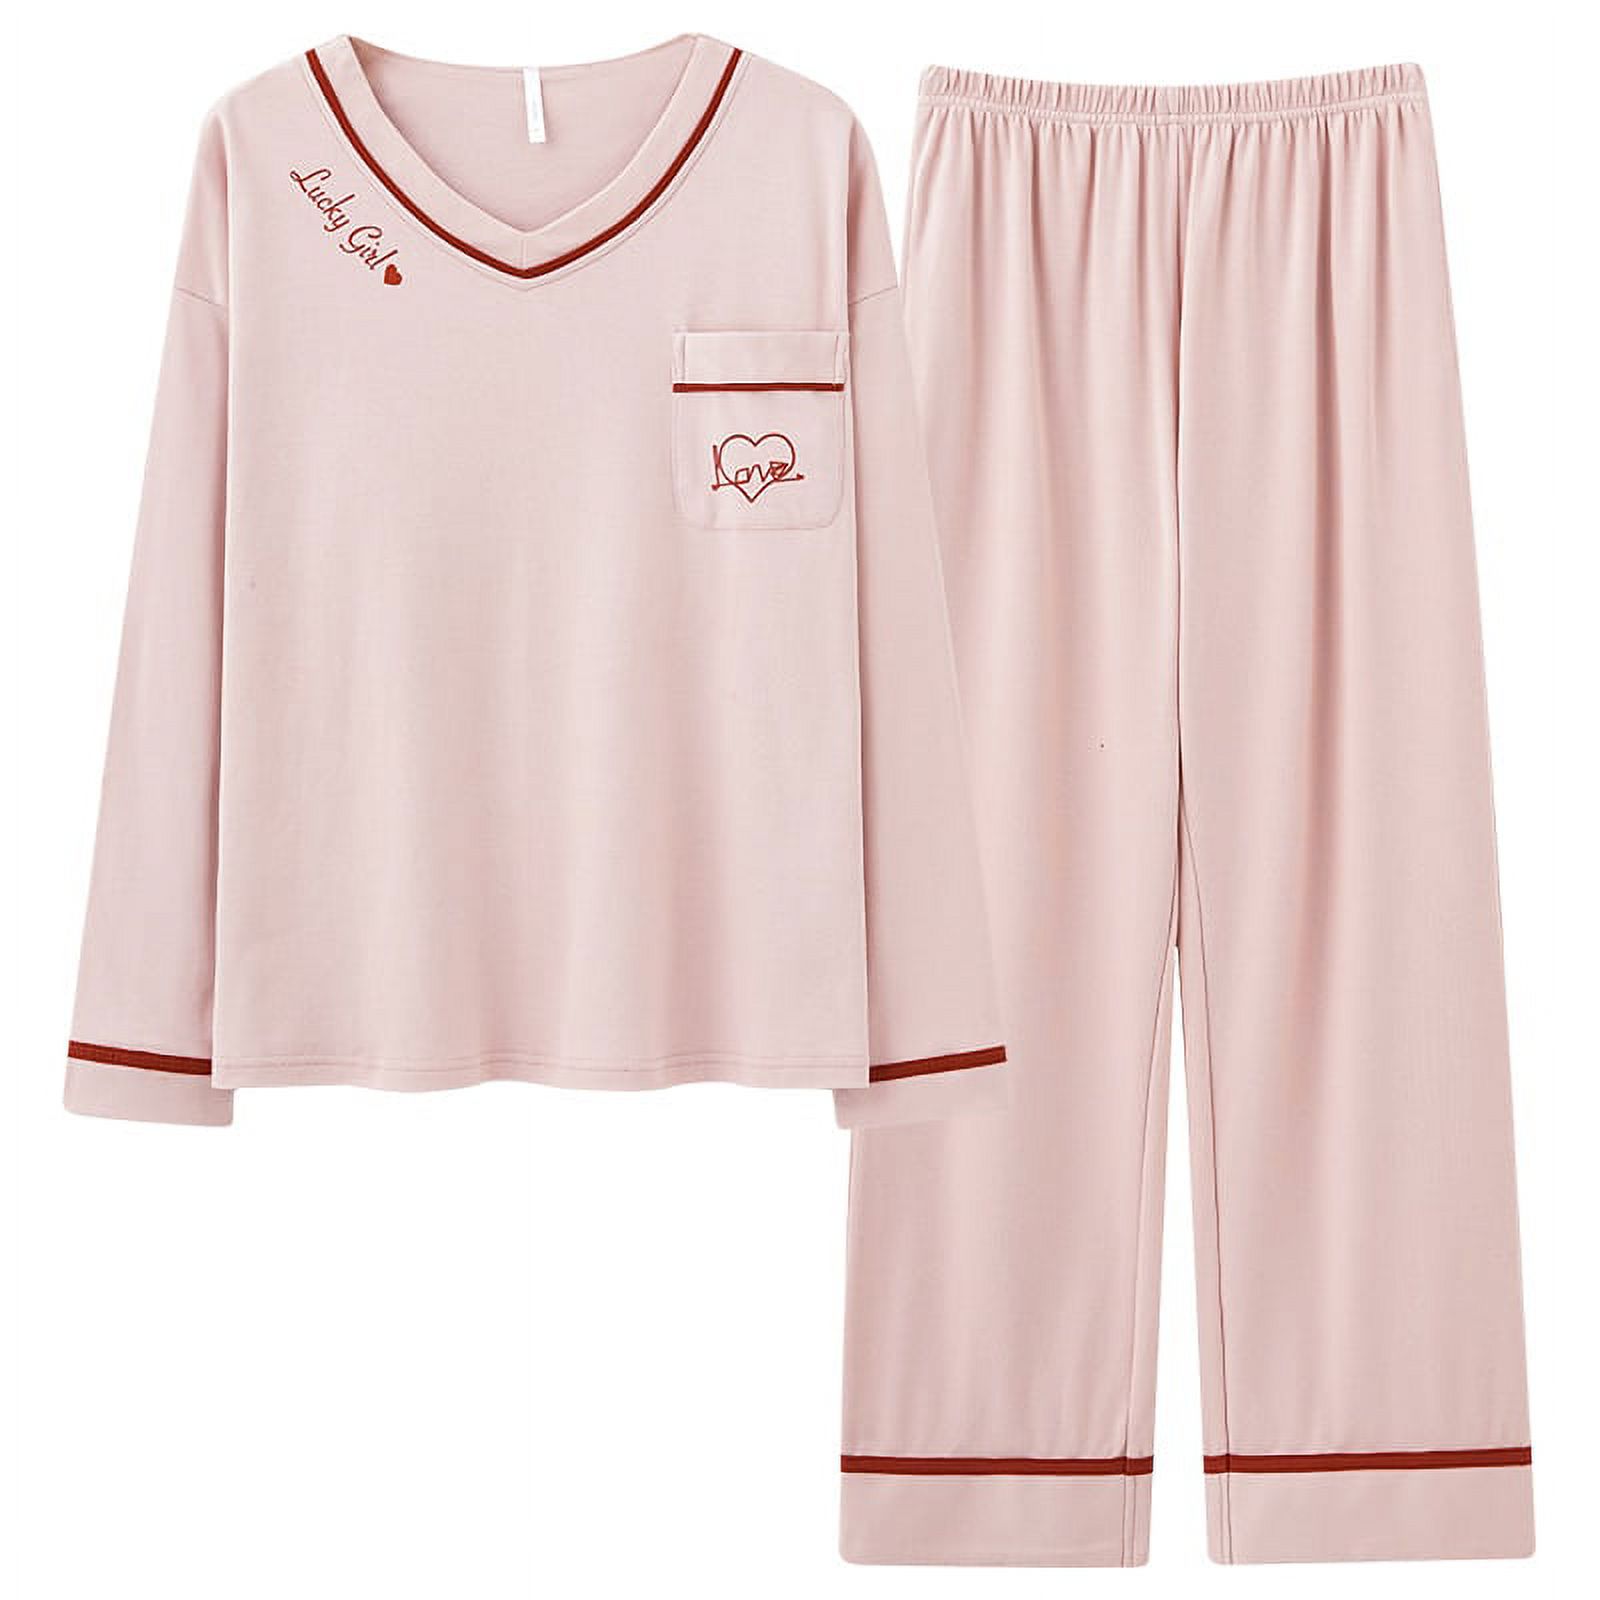 DanceeMangoo New Long Sleeve Cotton Pajamas Set Young Style Women ...